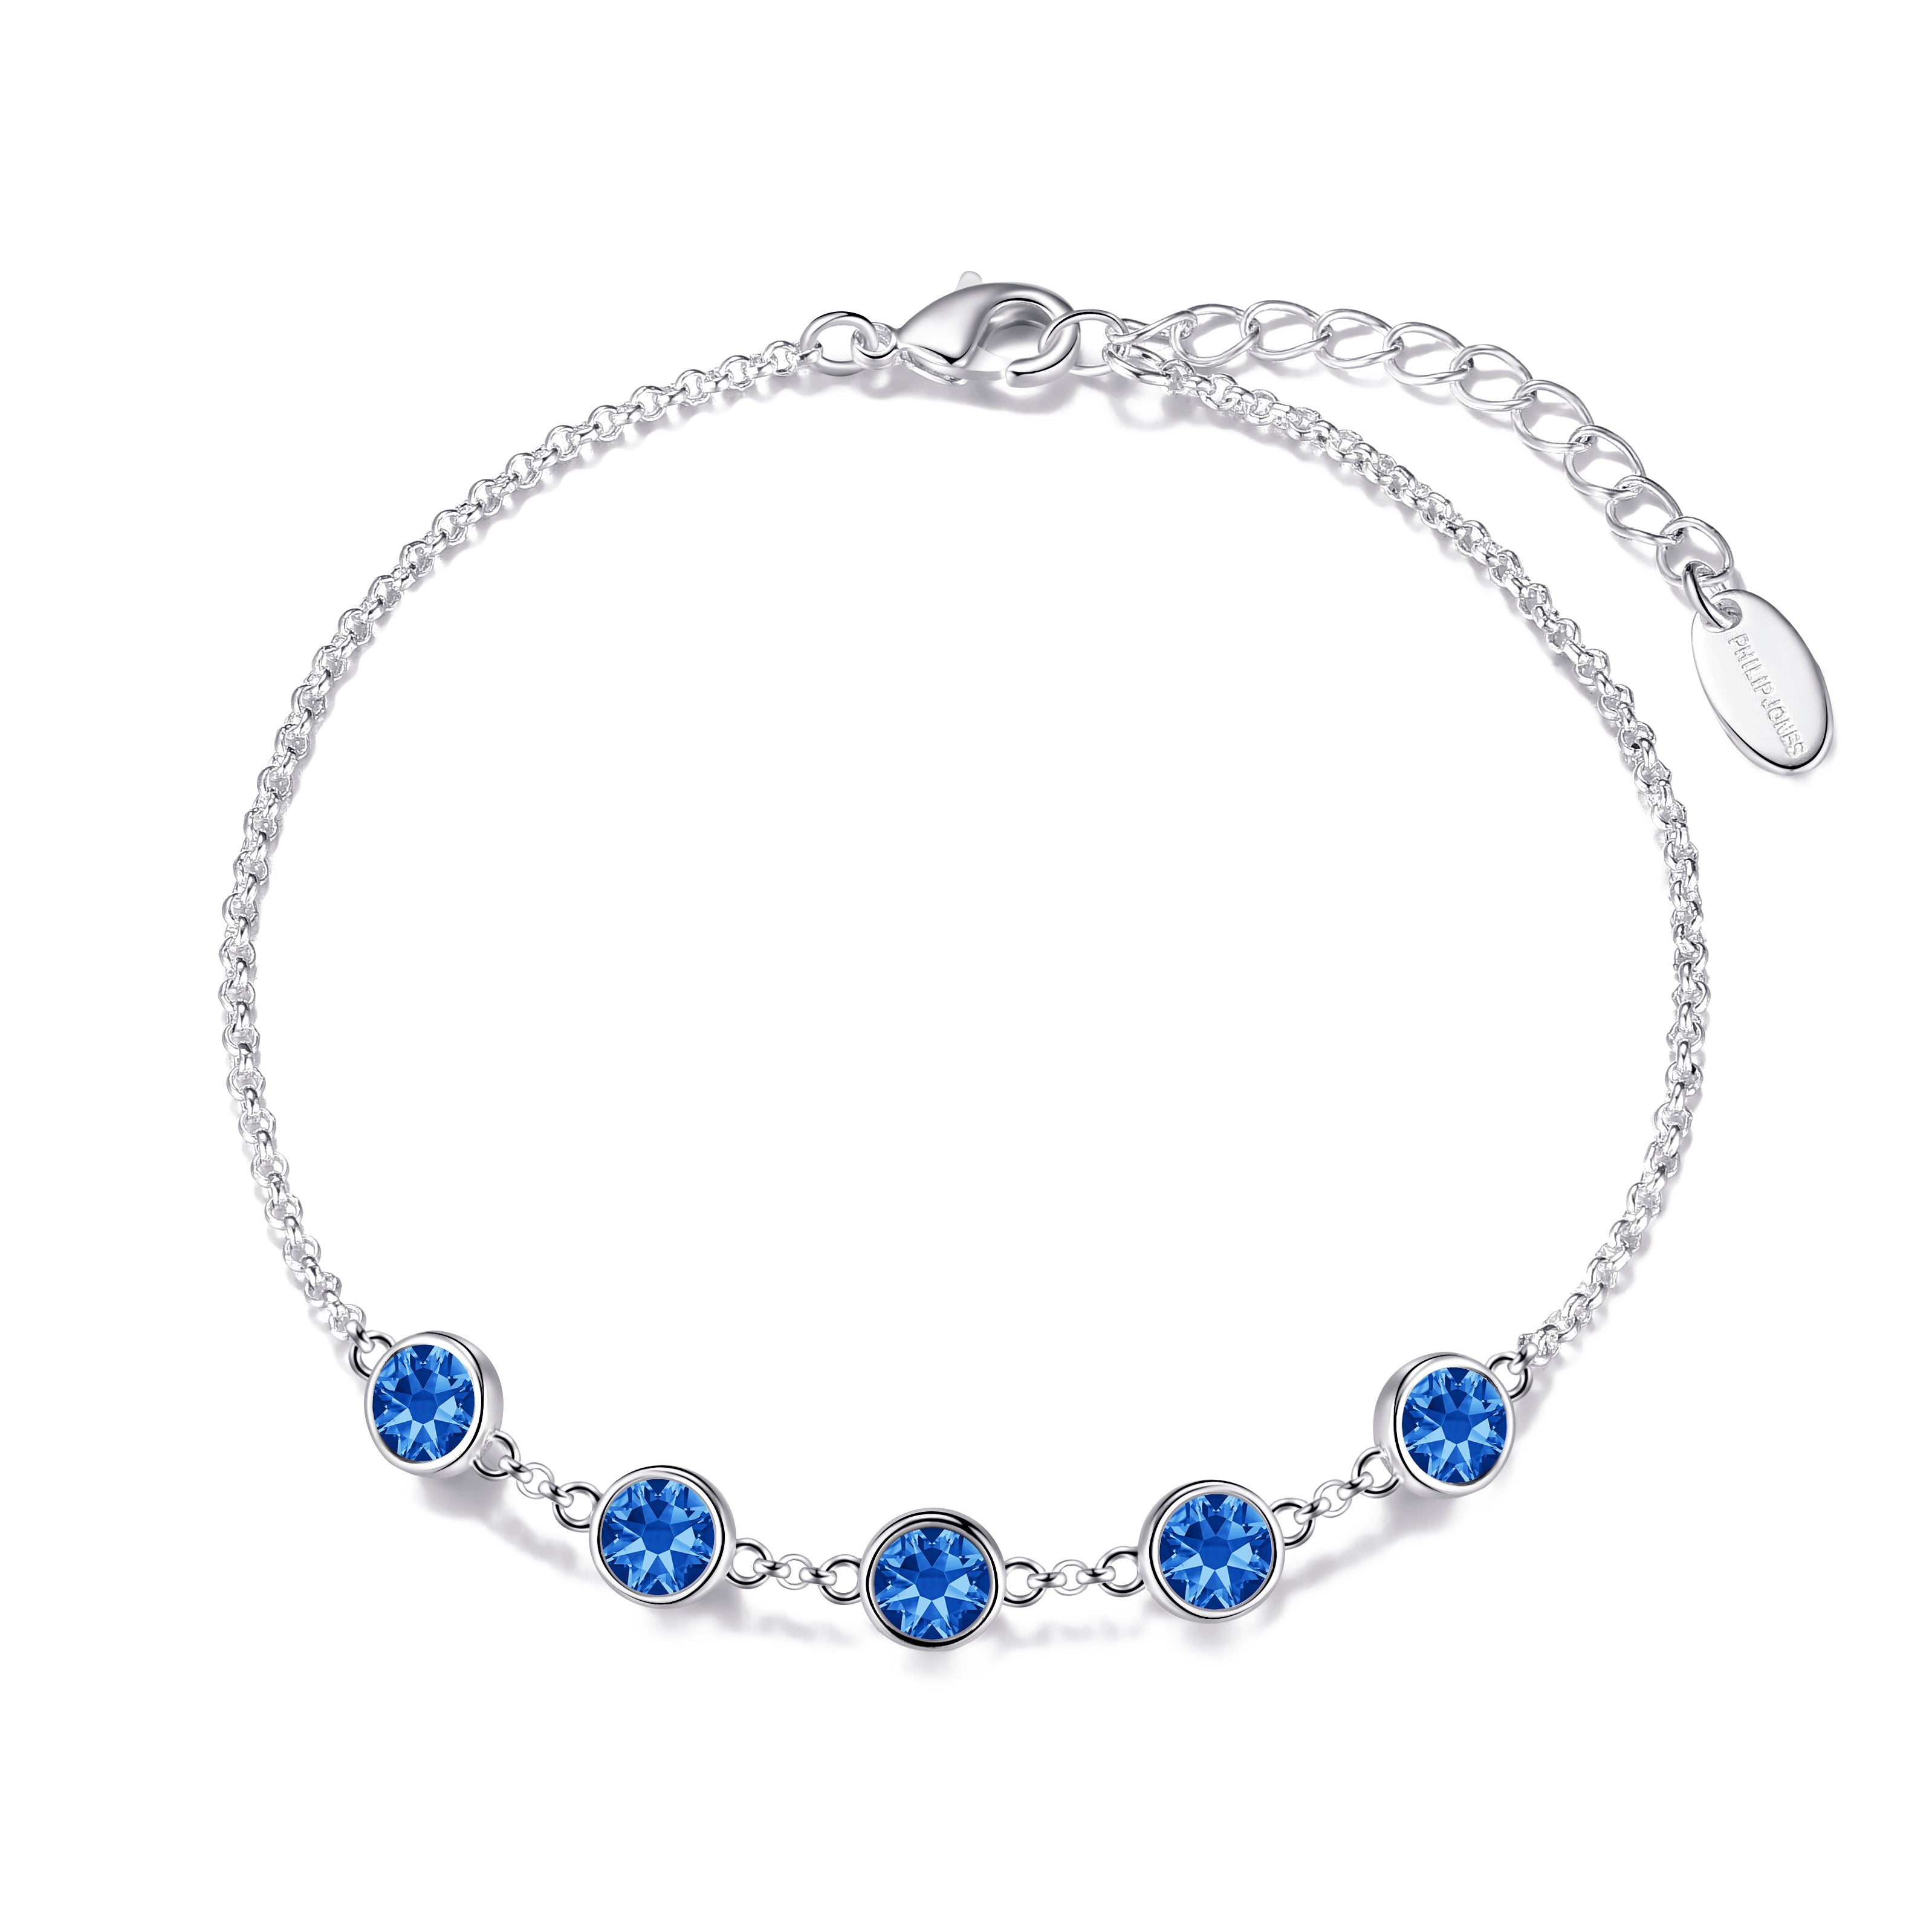 Dark Blue Crystal Chain Bracelet Created with Zircondia® Crystals by Philip Jones Jewellery